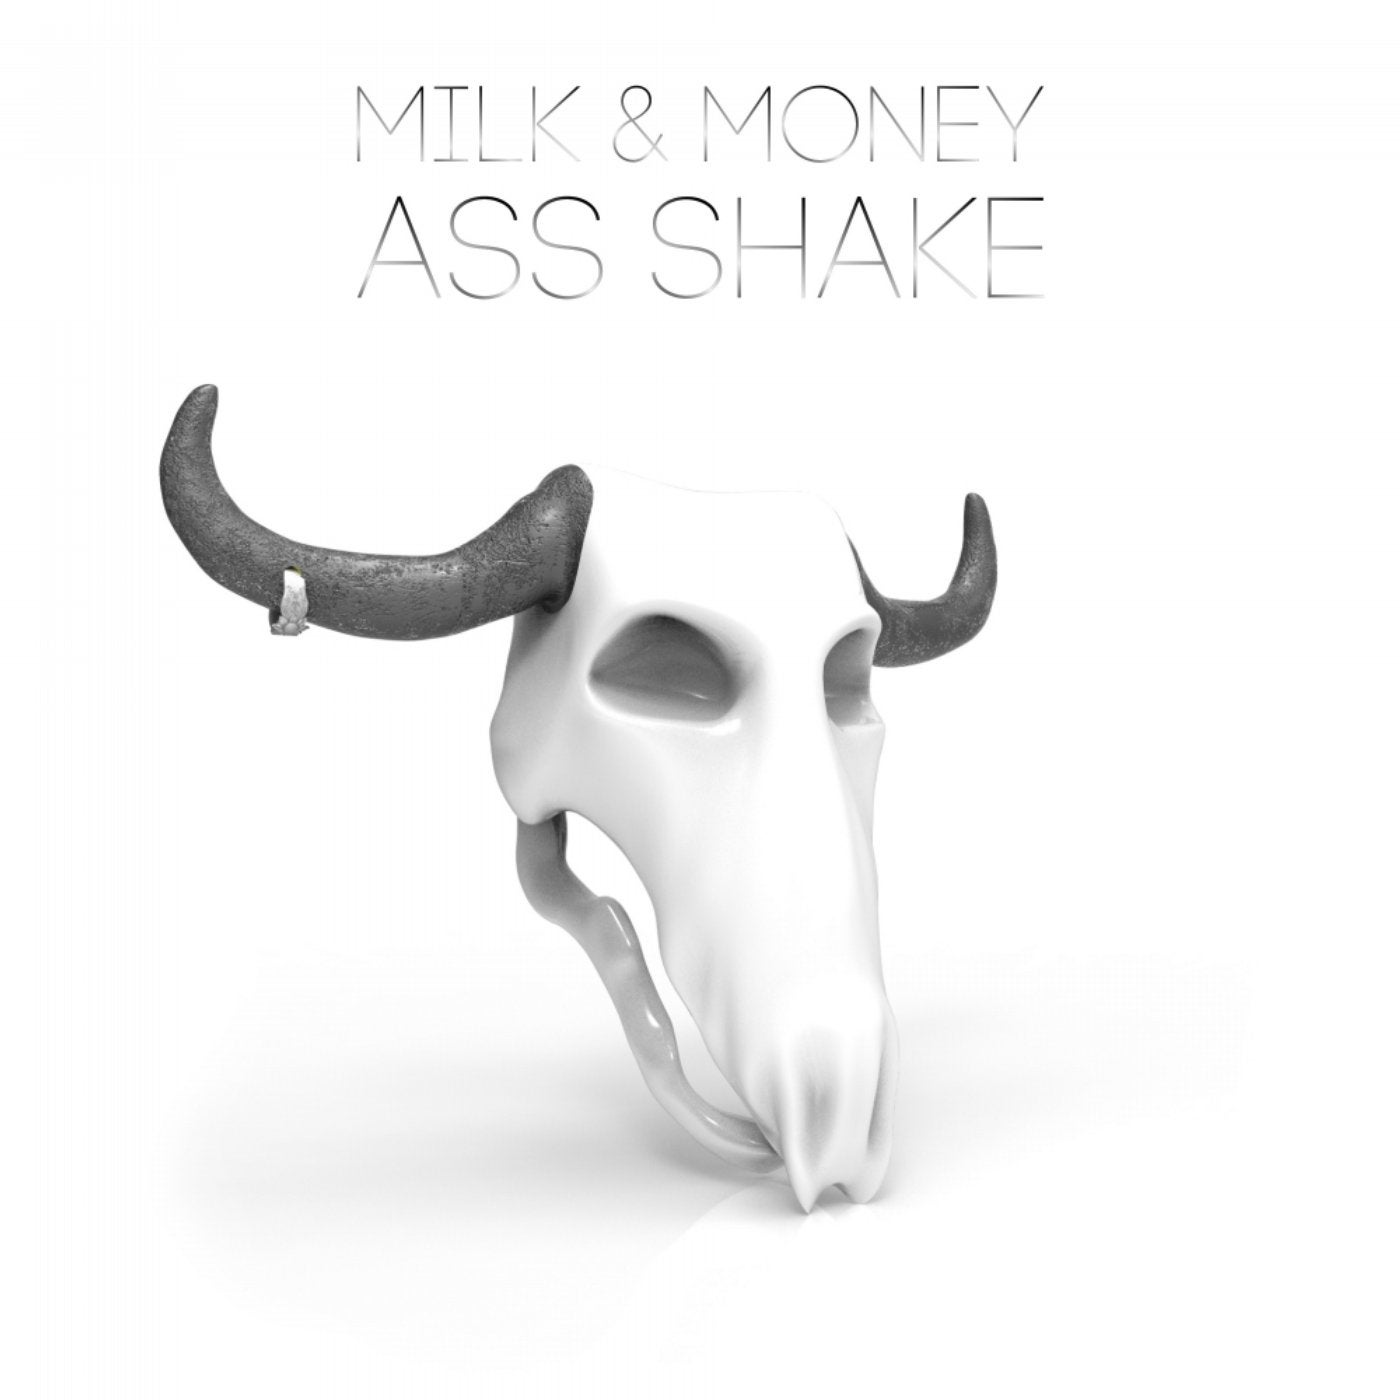 Ass Shake